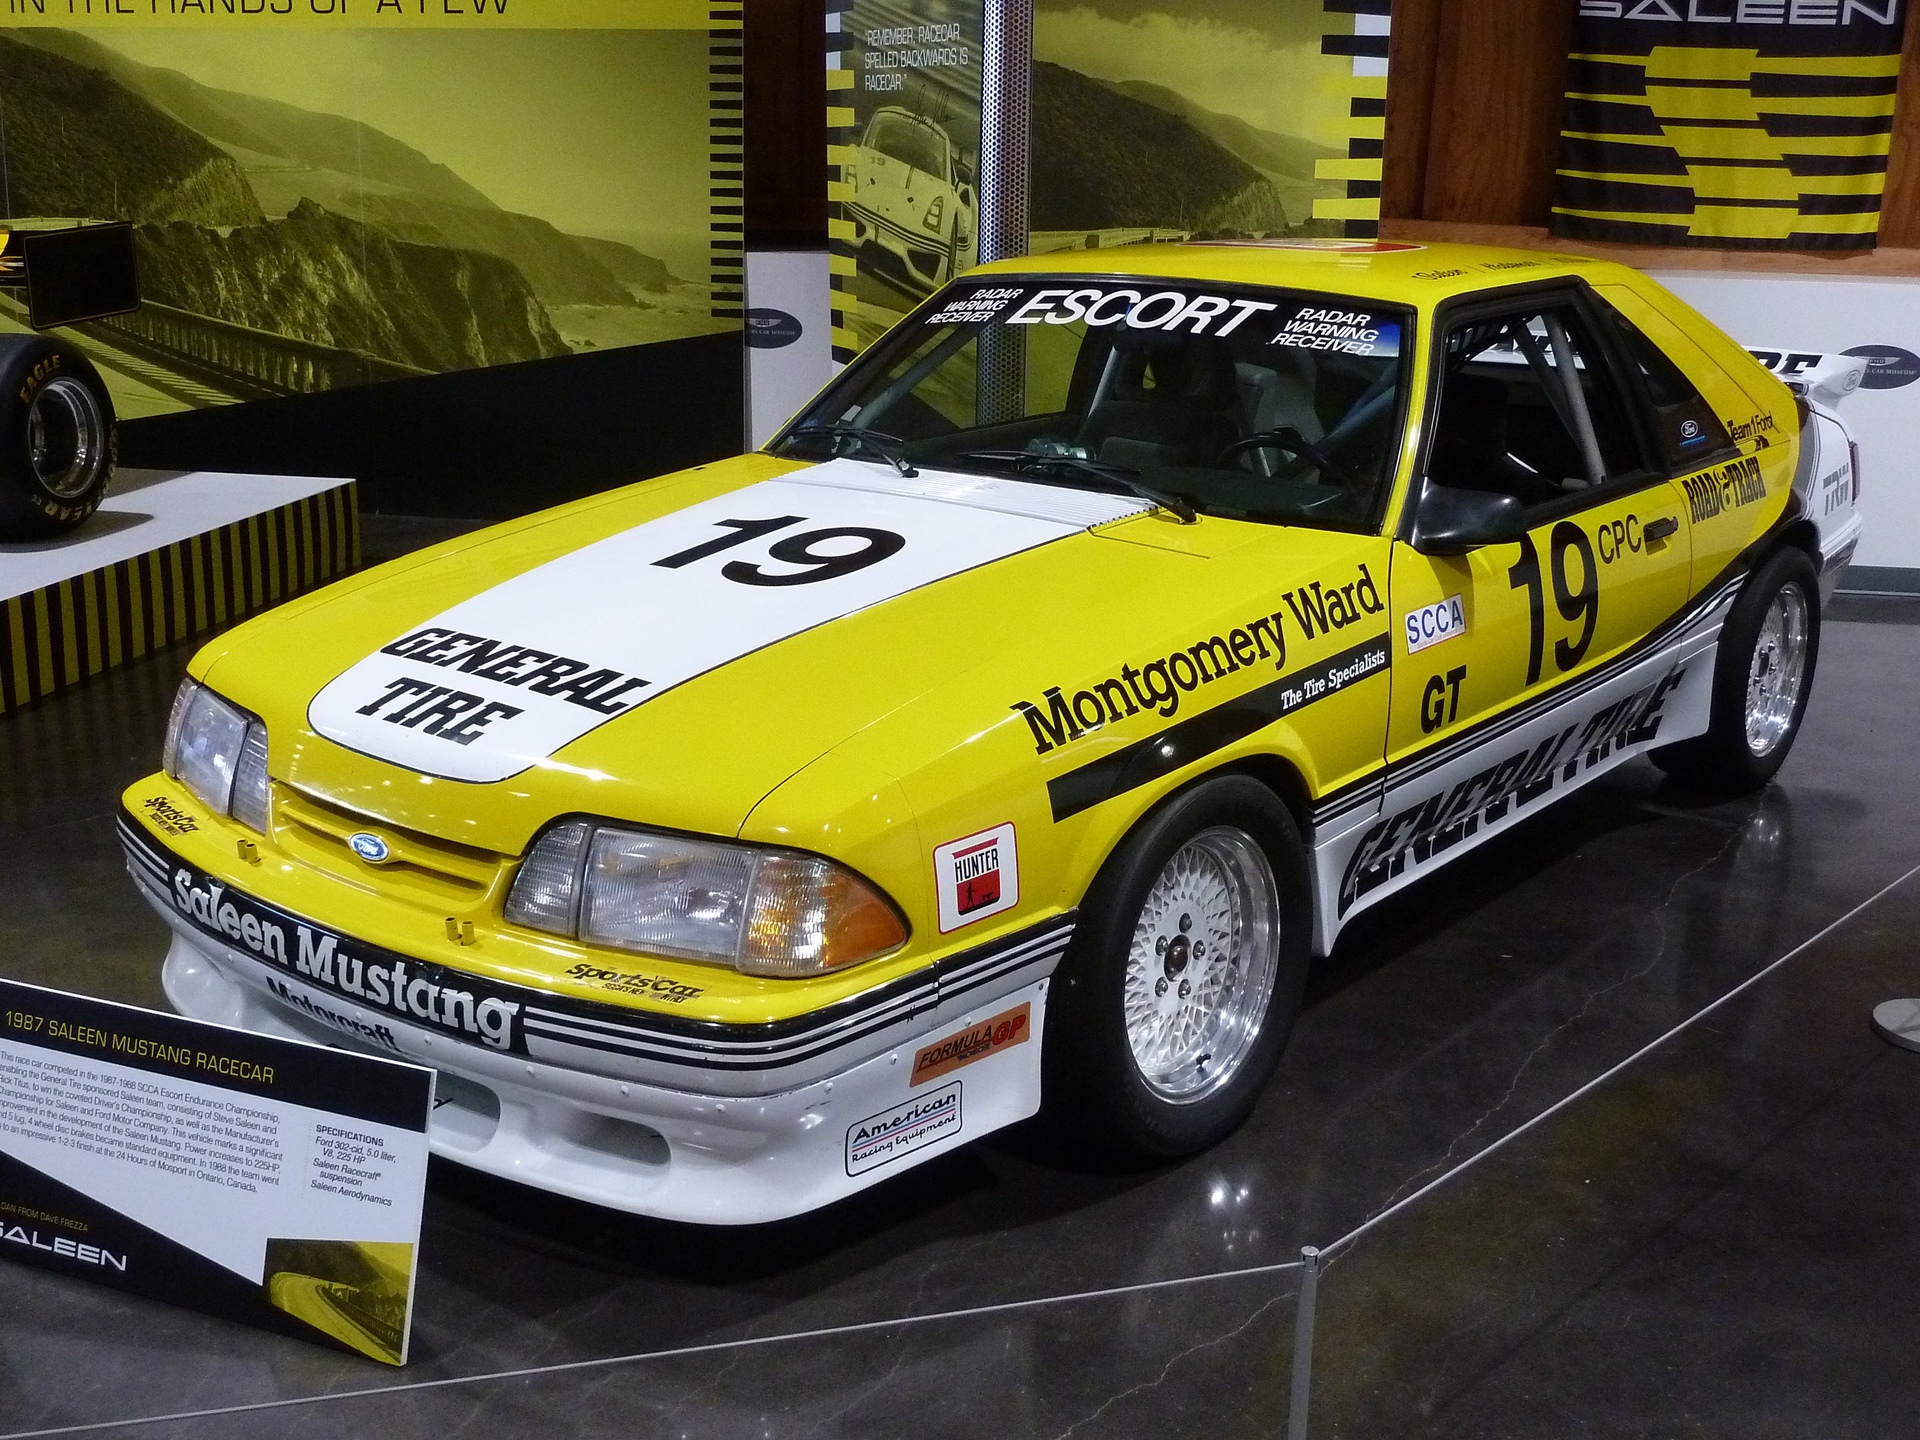 Yellow 1987 Saleen Mustang race car in museum